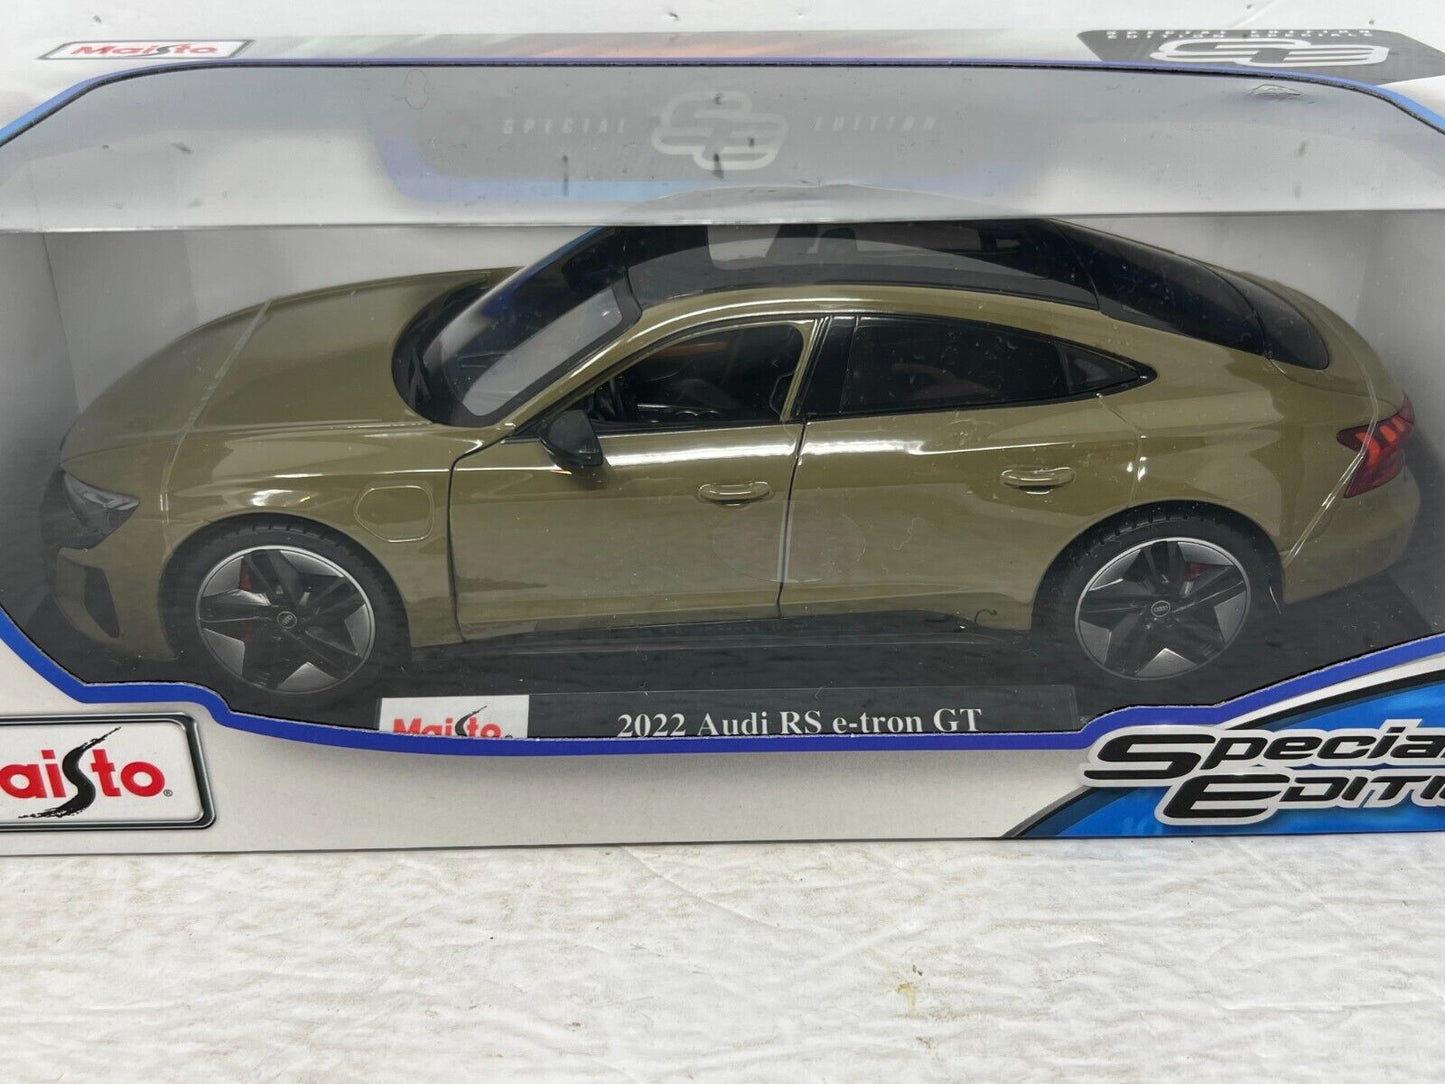 Maisto 2022 Audi RS e-tron GT Special Edition 1:18 Diecast